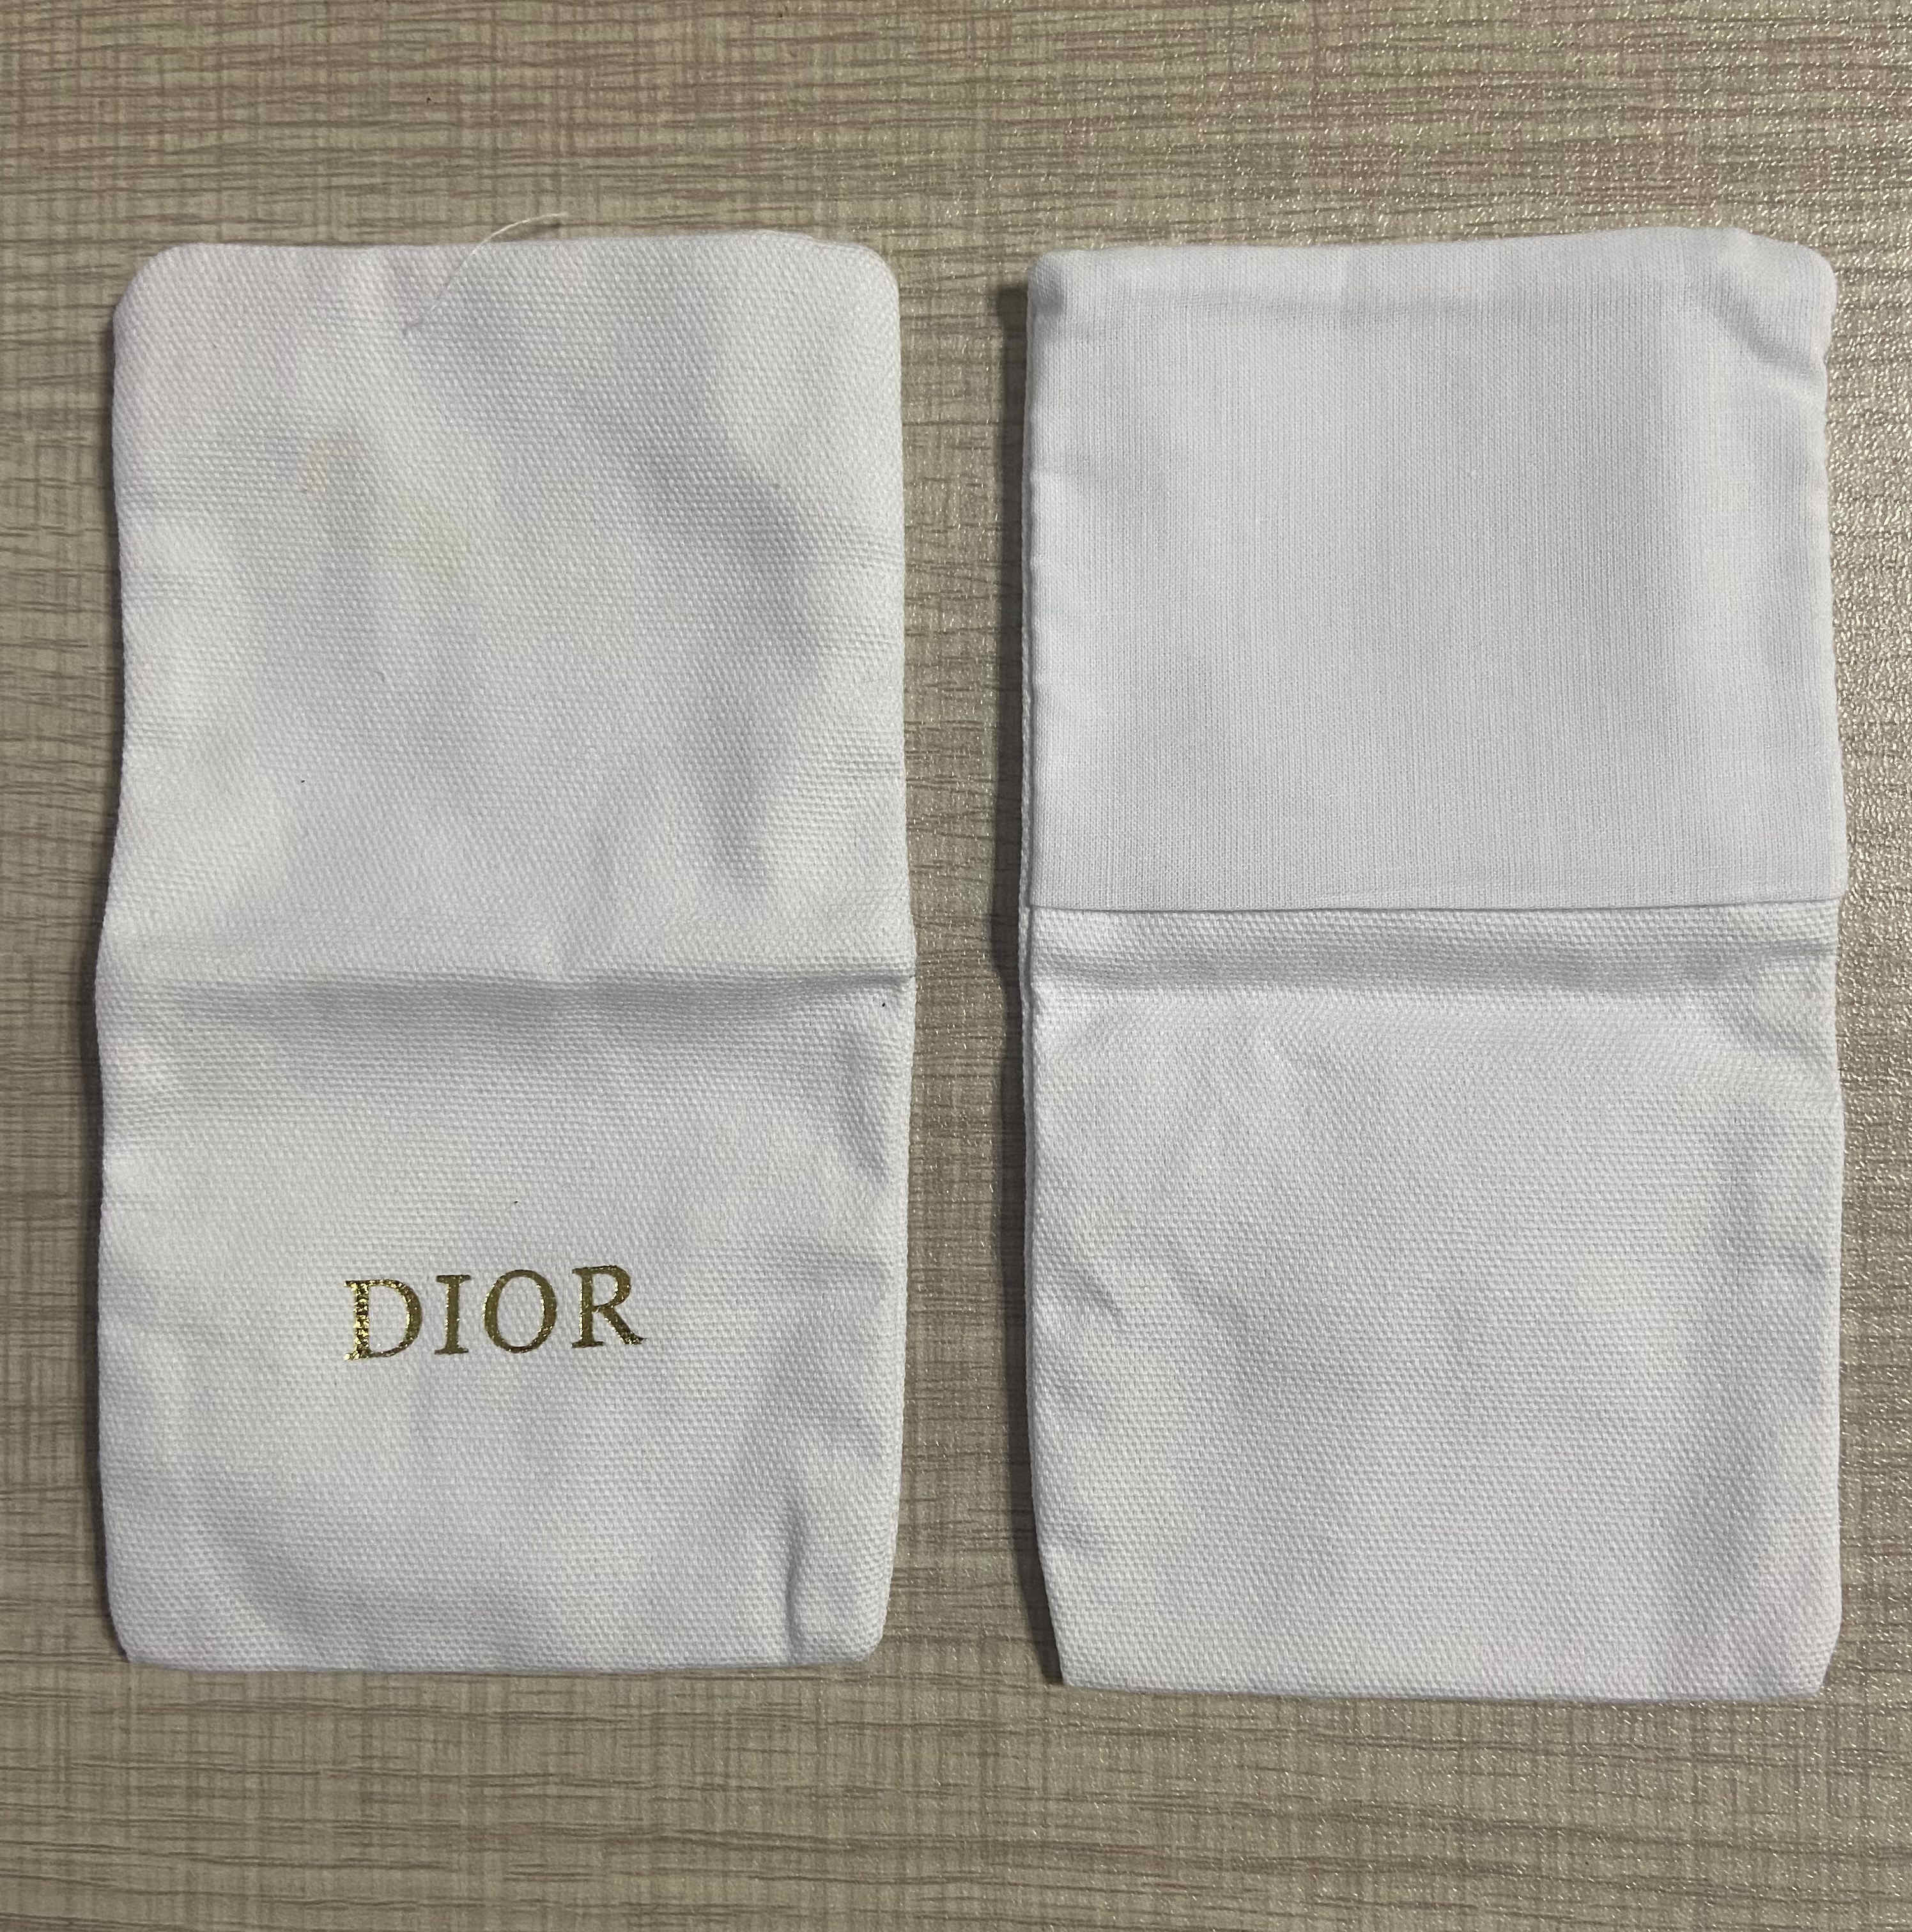 Dior jewelry dust bag 1pcs